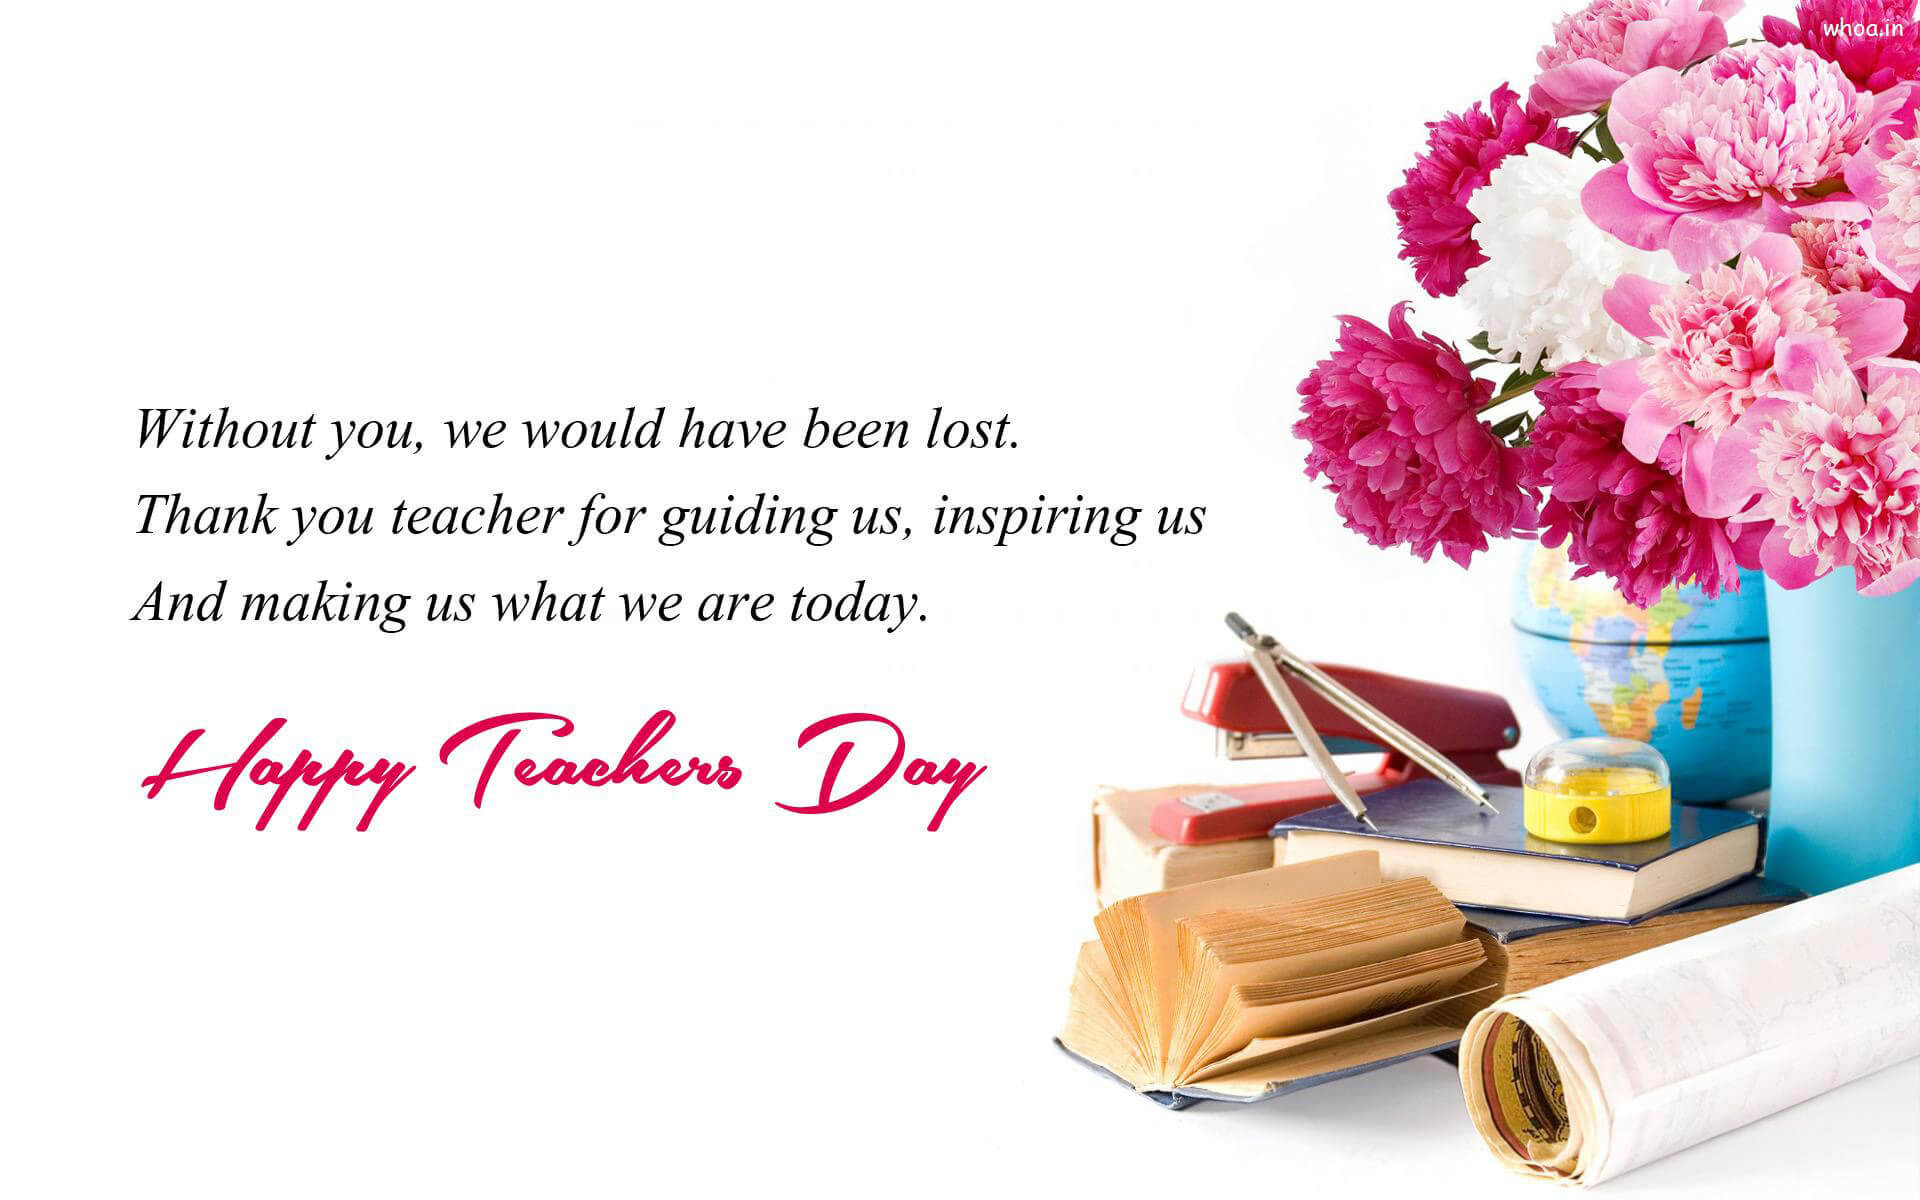 Happy Teachers' Day Quote Background